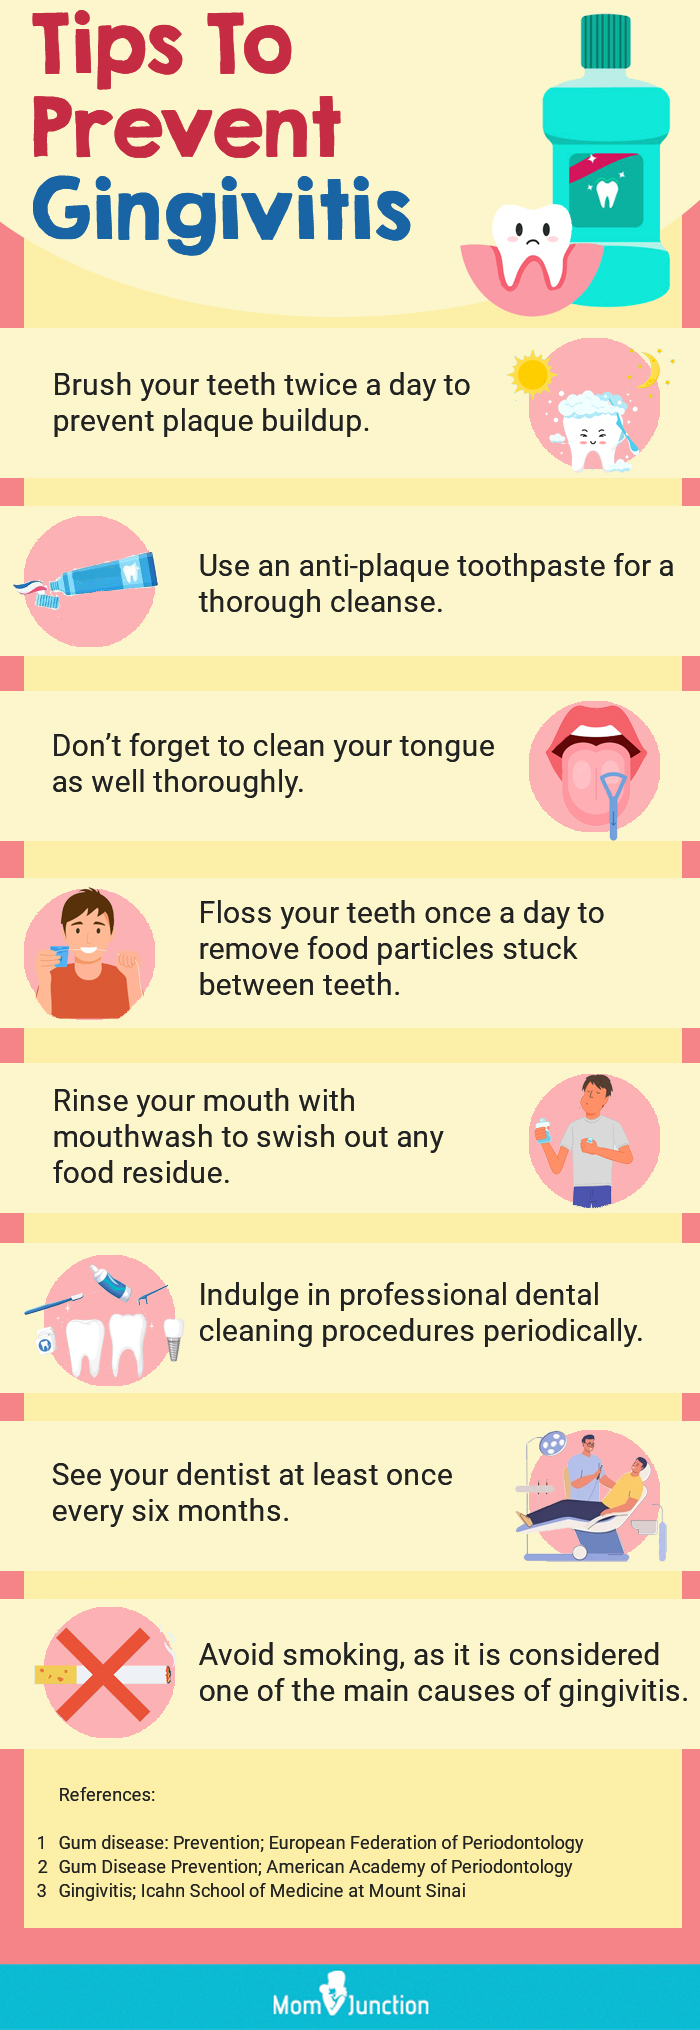 Tips To Prevent Gingivitis (infographic)